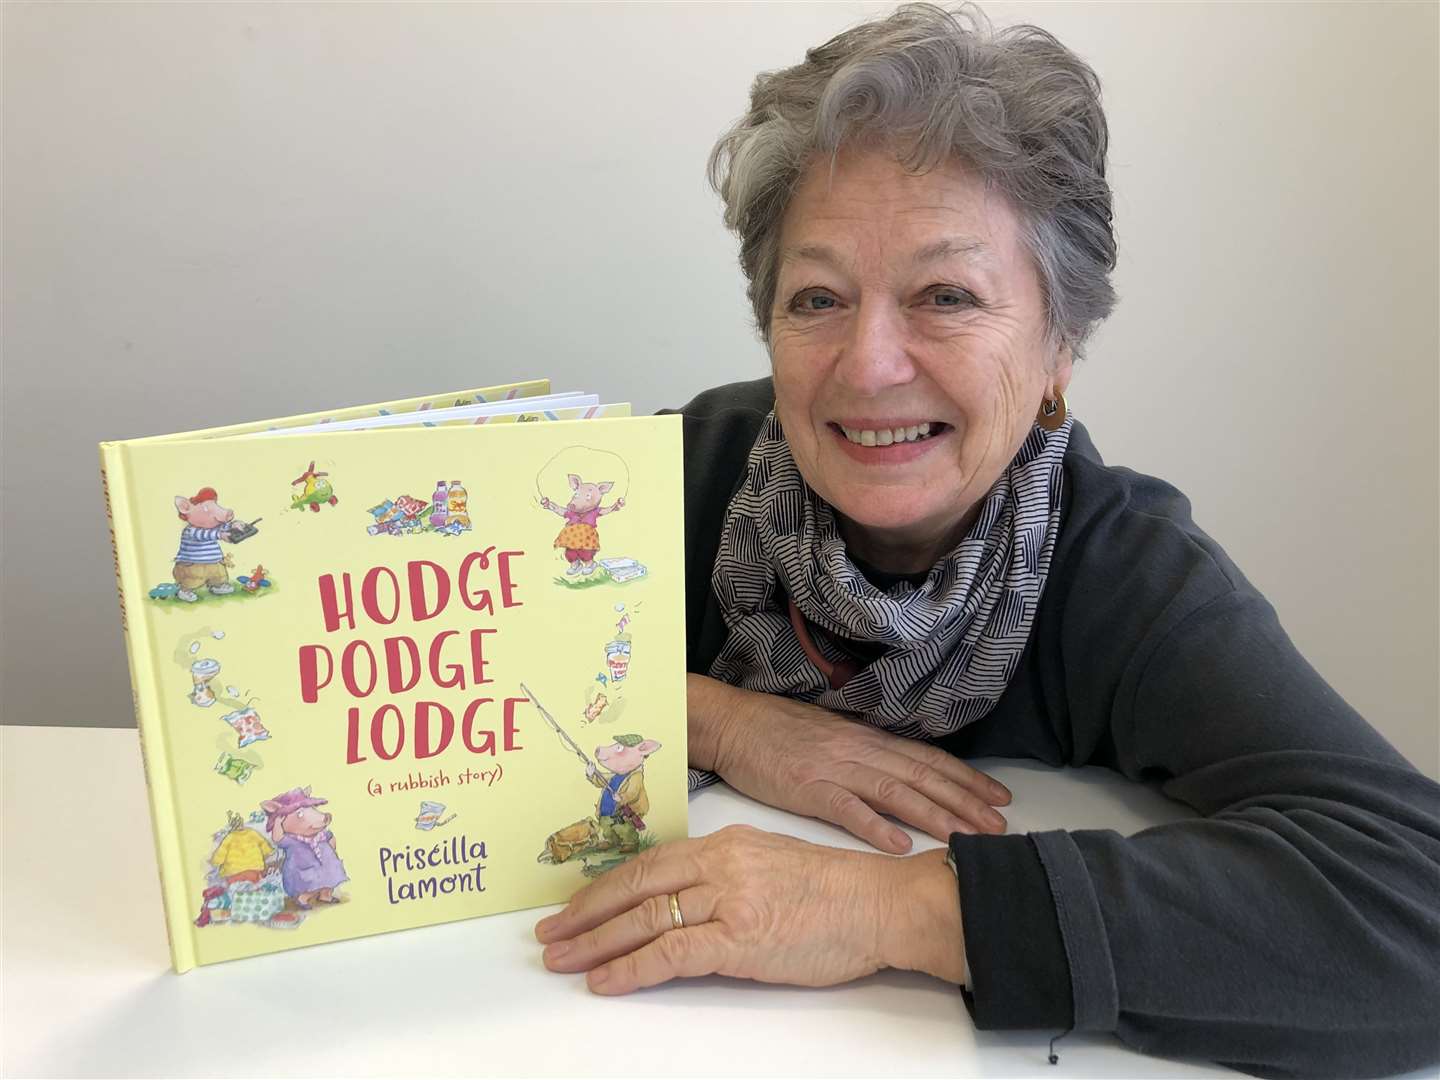 Priscilla Lamont, author of Hodge Podge Lodge.